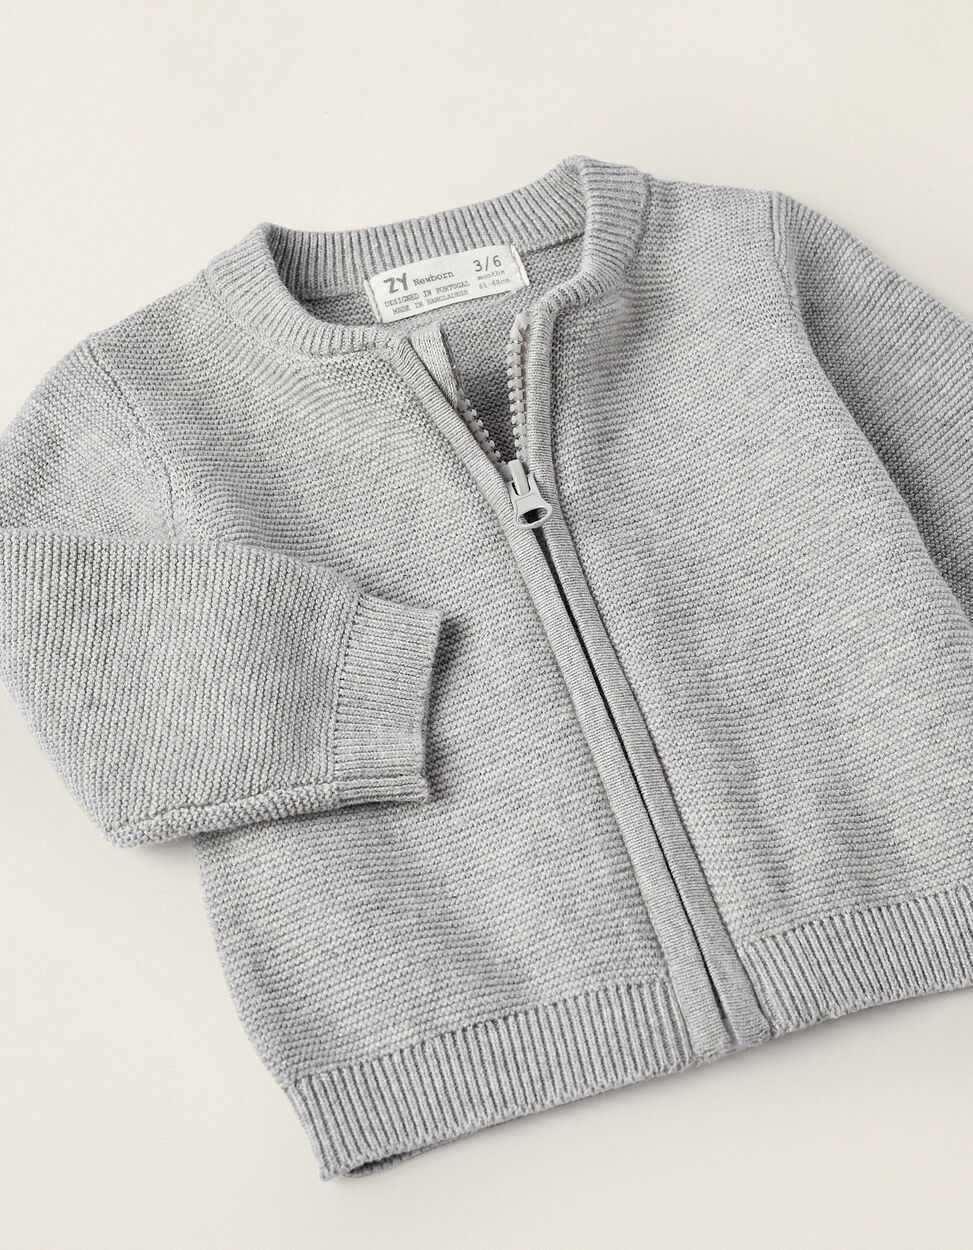 Buy Online Cotton Knit Cardigan for Newborn Boys, Grey